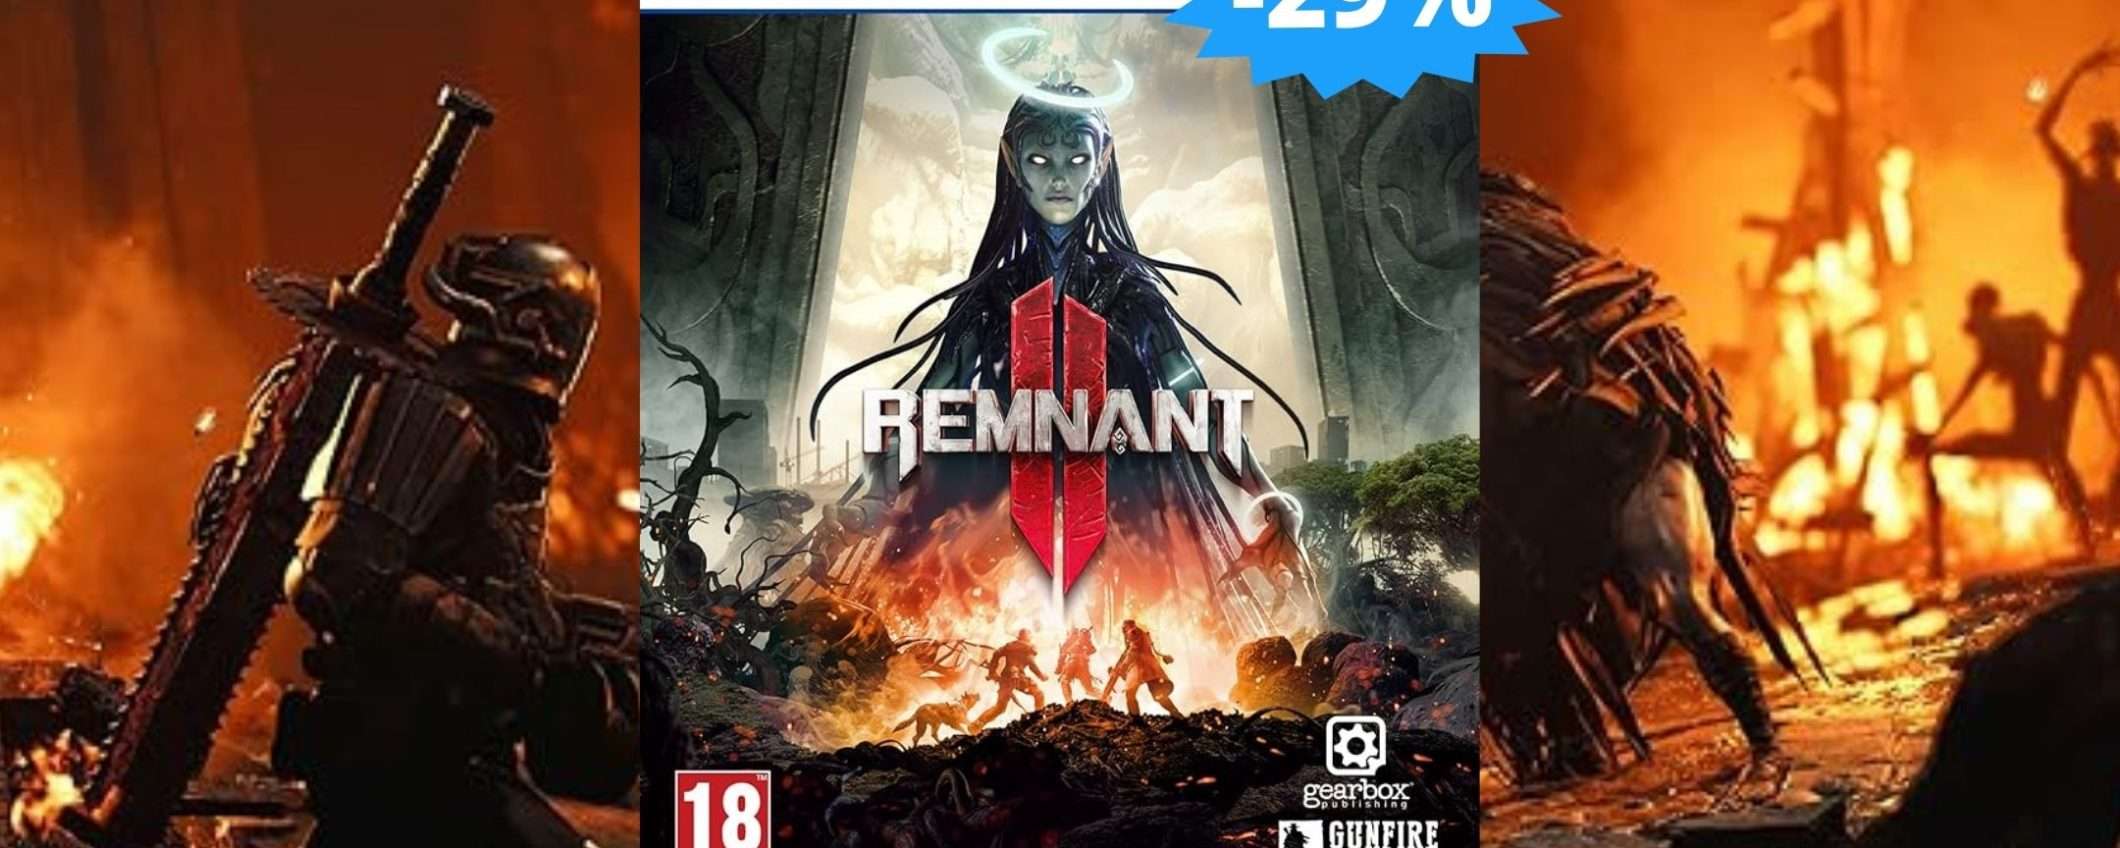 Remnant 2 per PS5: un'avventura IMPERDIBILE (-29%)